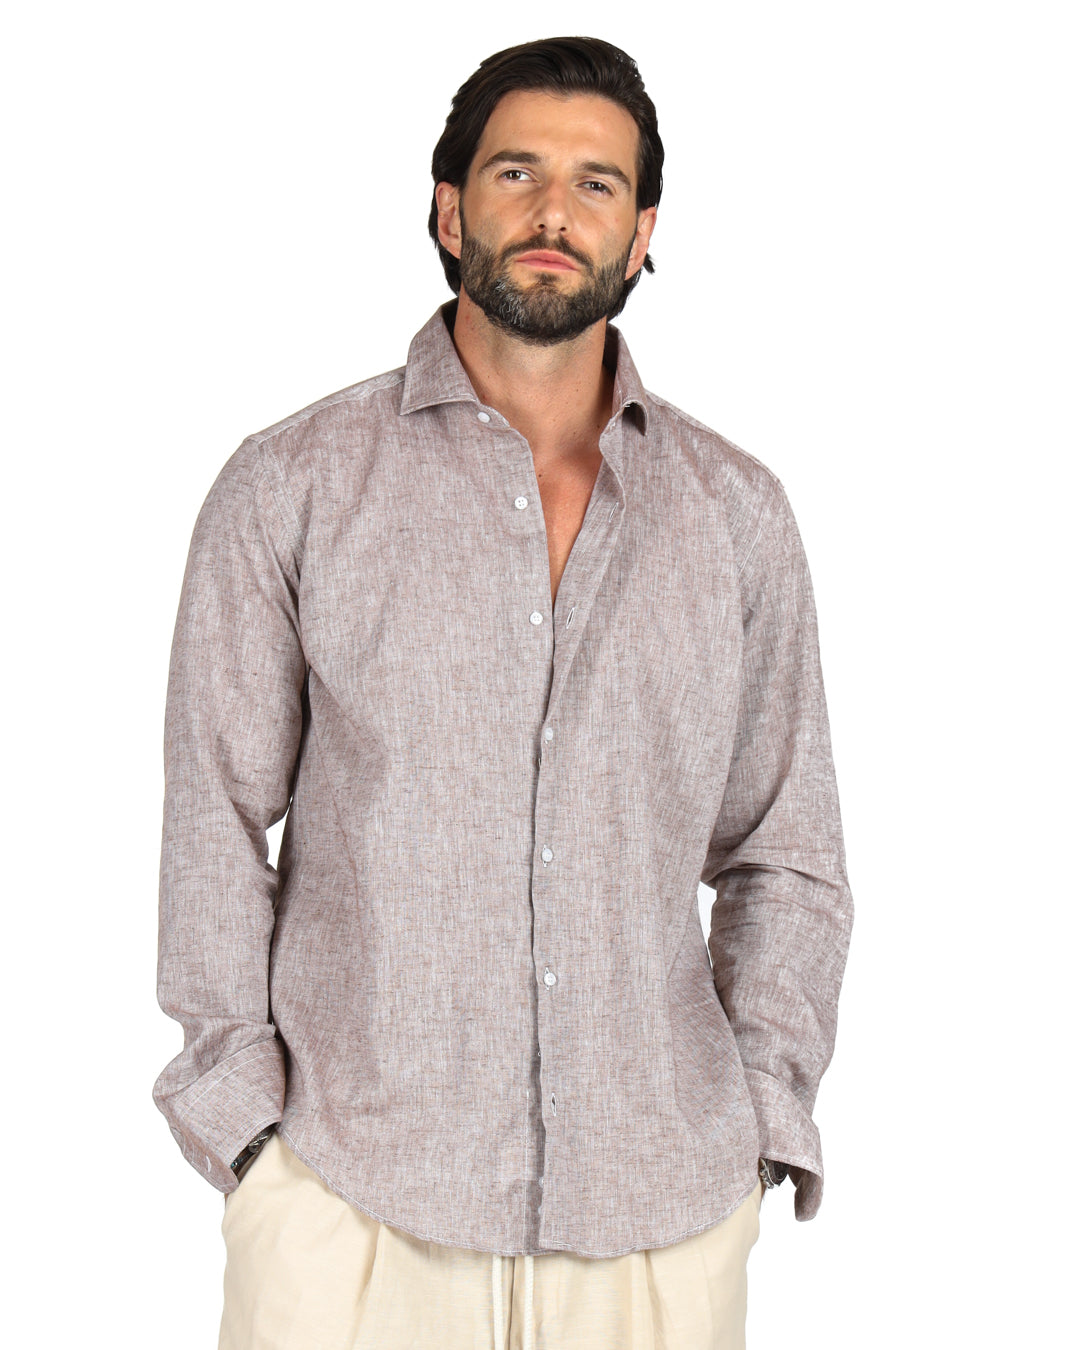 Praiano - Classic mud shirt in linen